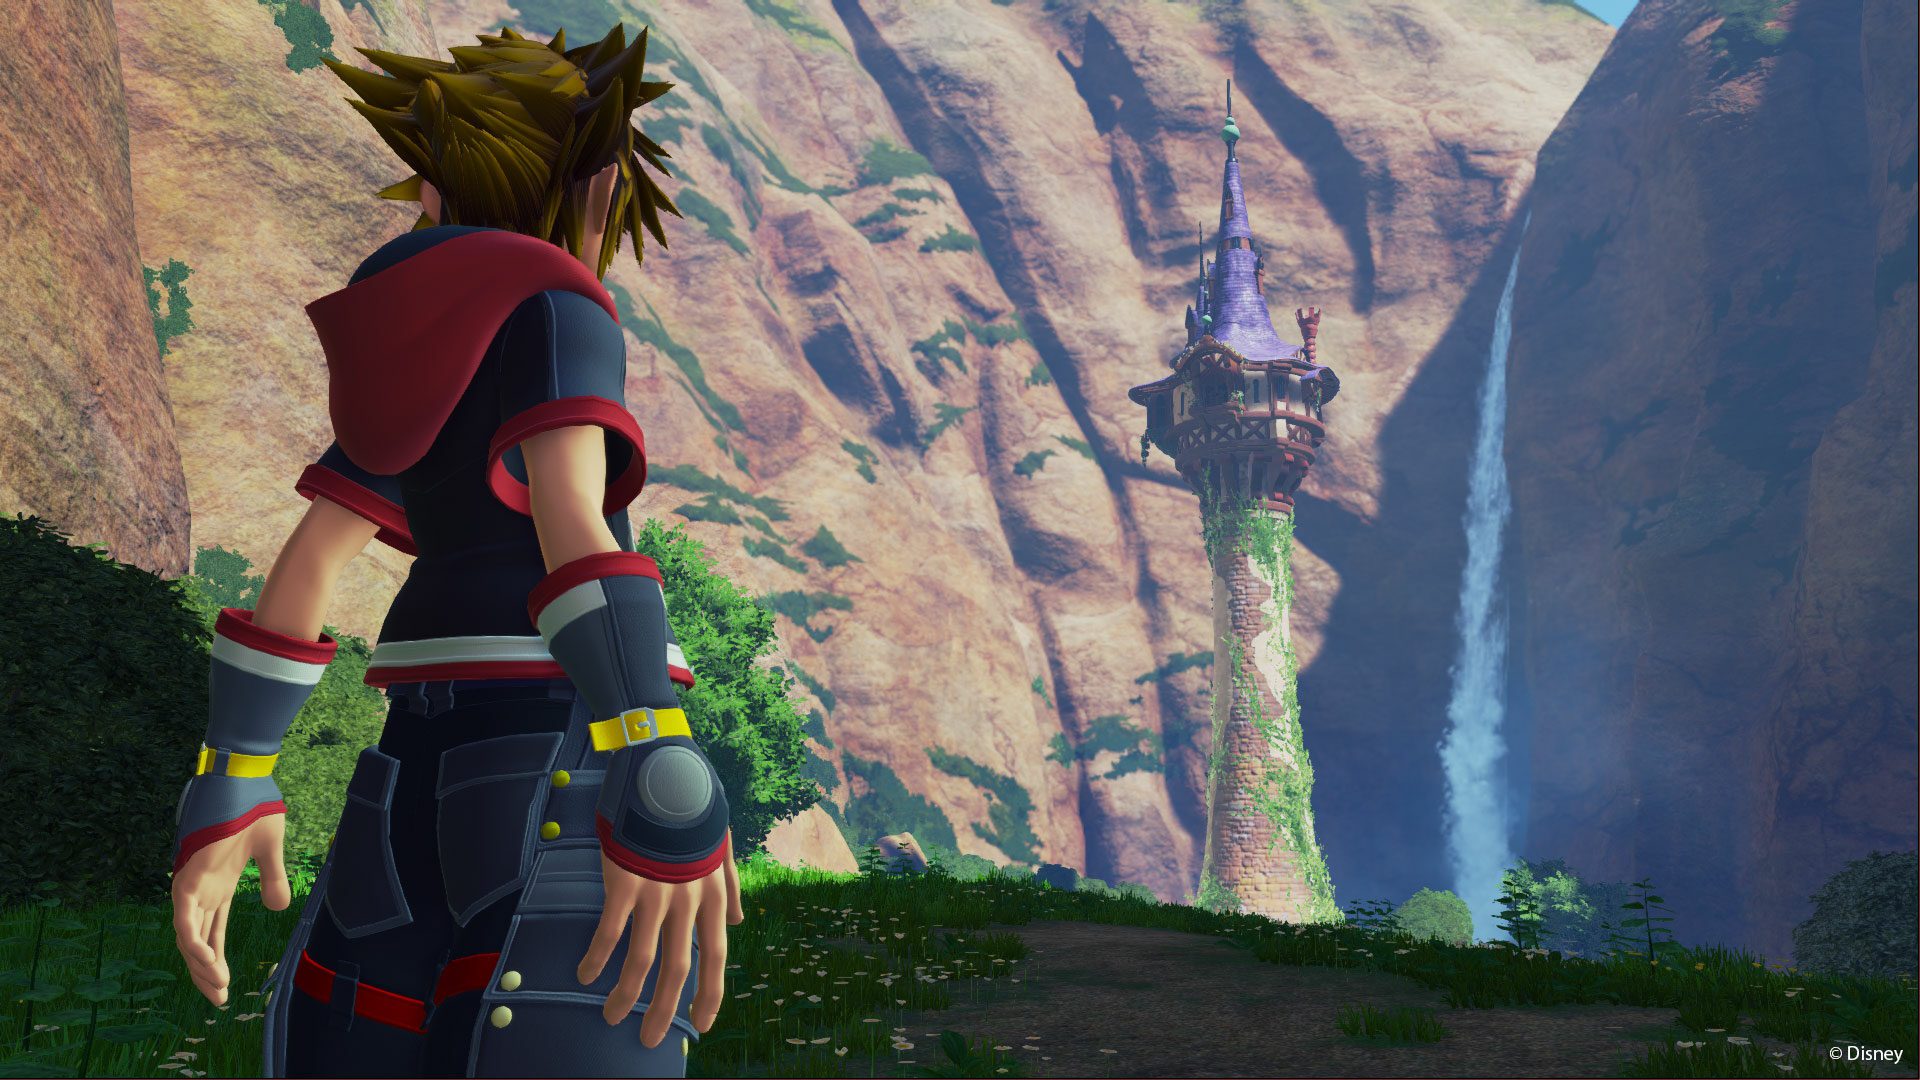 E3 2015: New Kingdom Hearts III Information Released